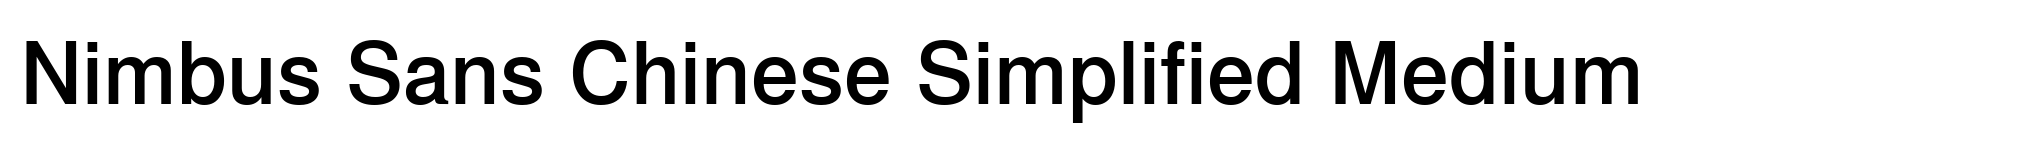 Nimbus Sans Chinese Simplified Medium image